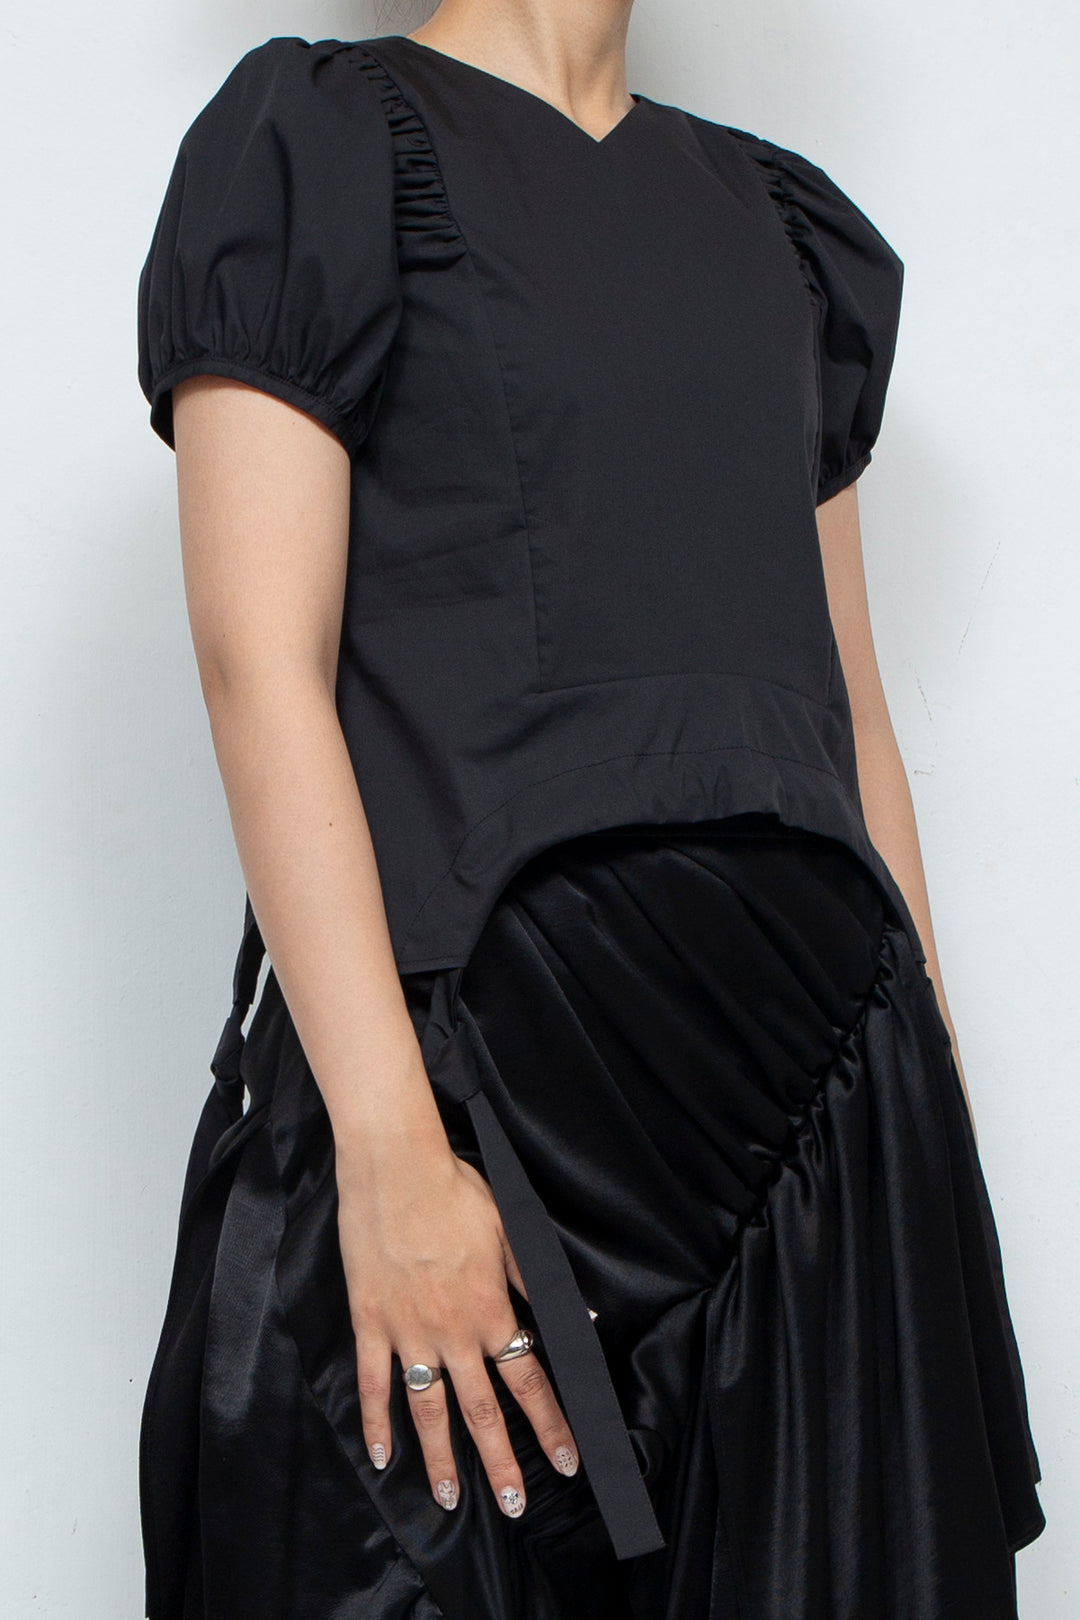 Design blouse black